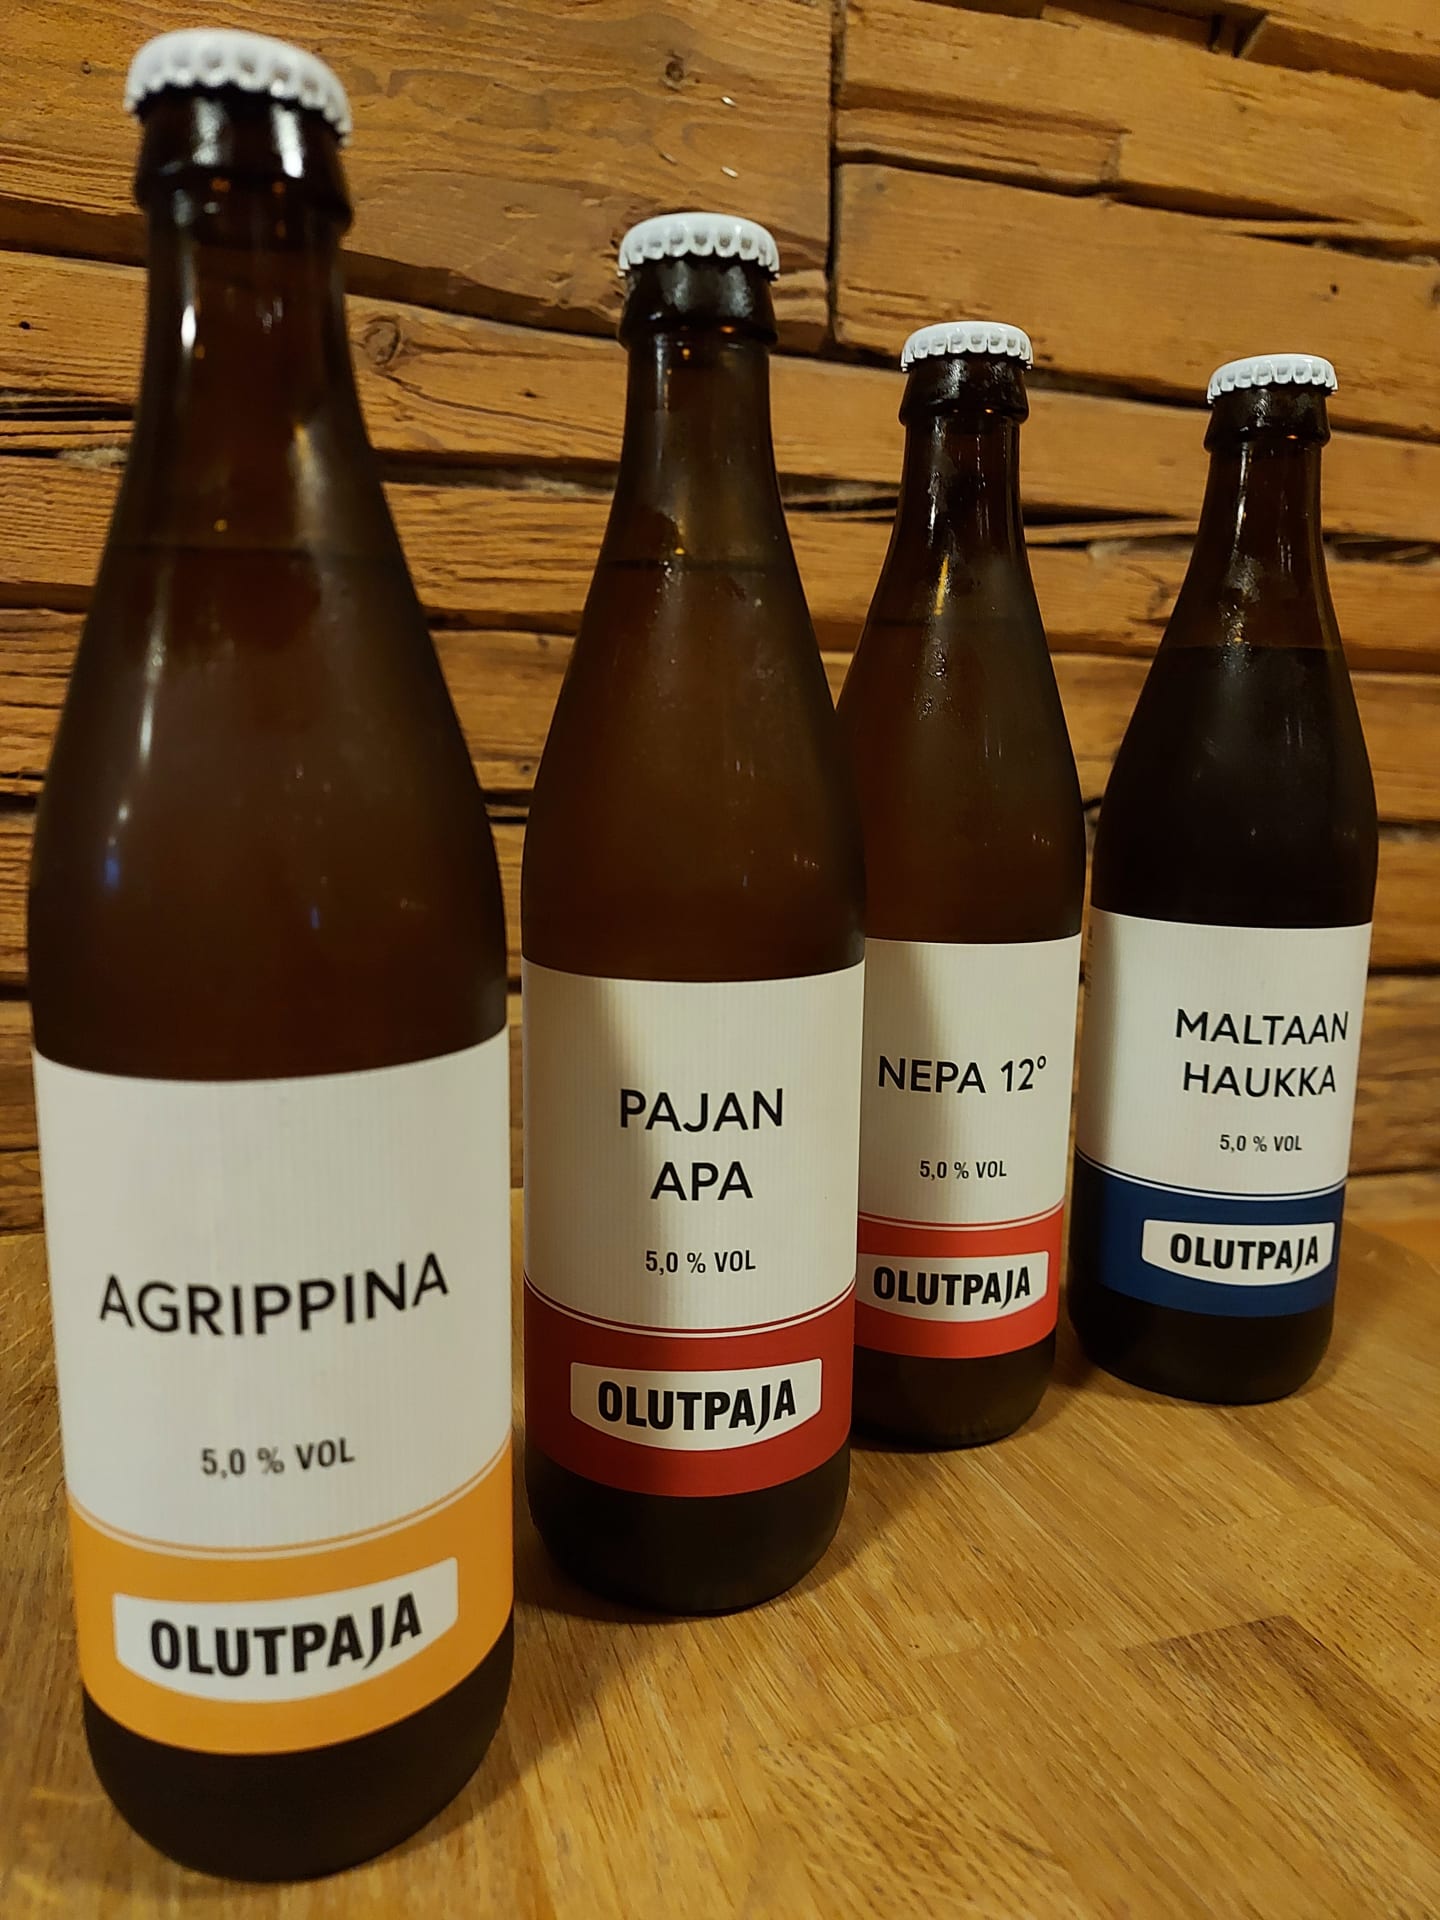 Olutpaja breweries selection